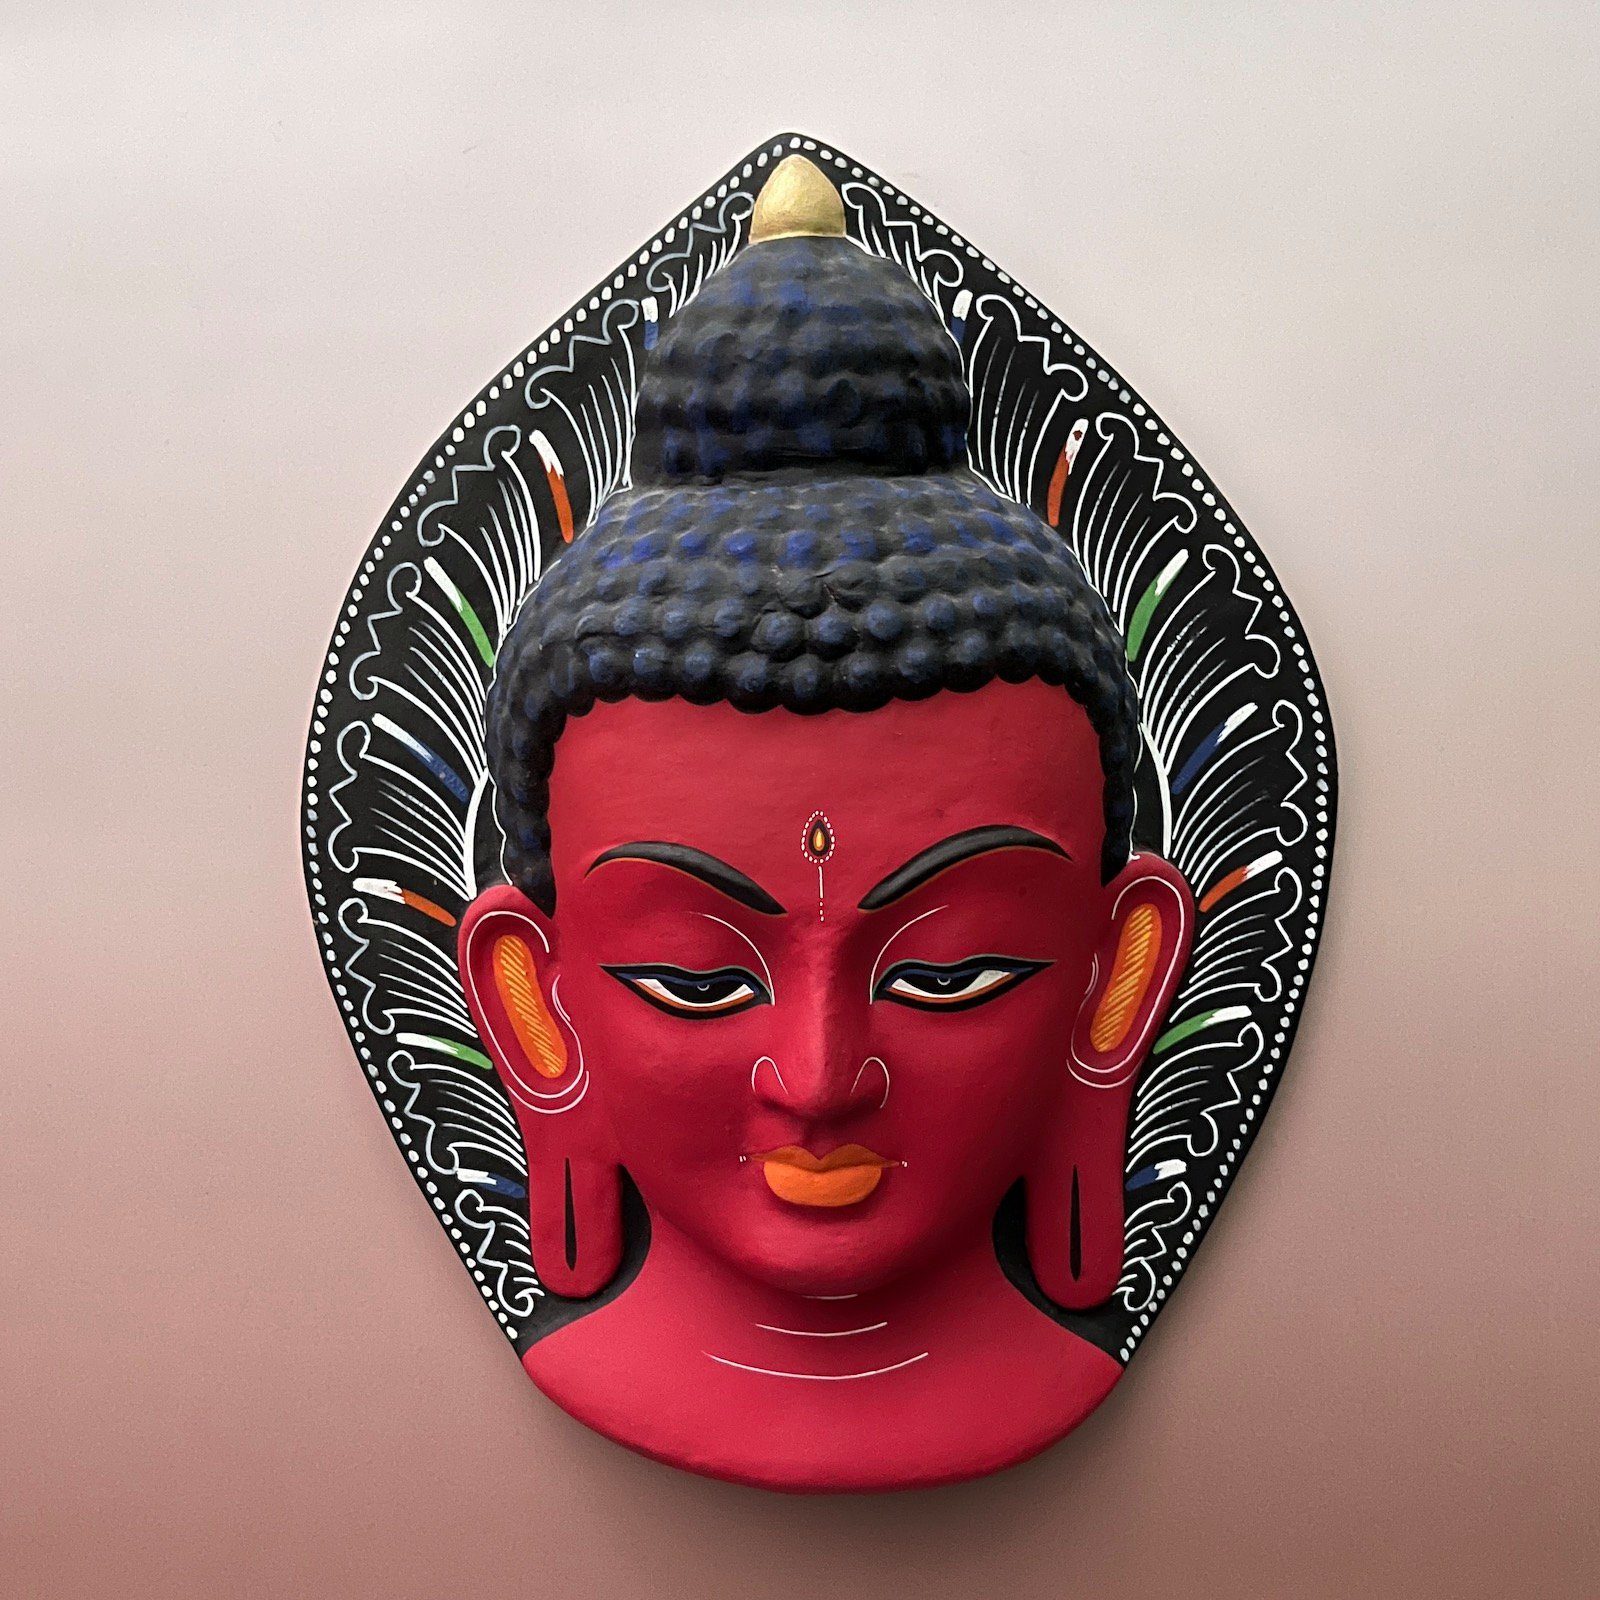 Asien LifeStyle Buddhafigur Buddha Kopf Maske Pappmache Figur Nepal